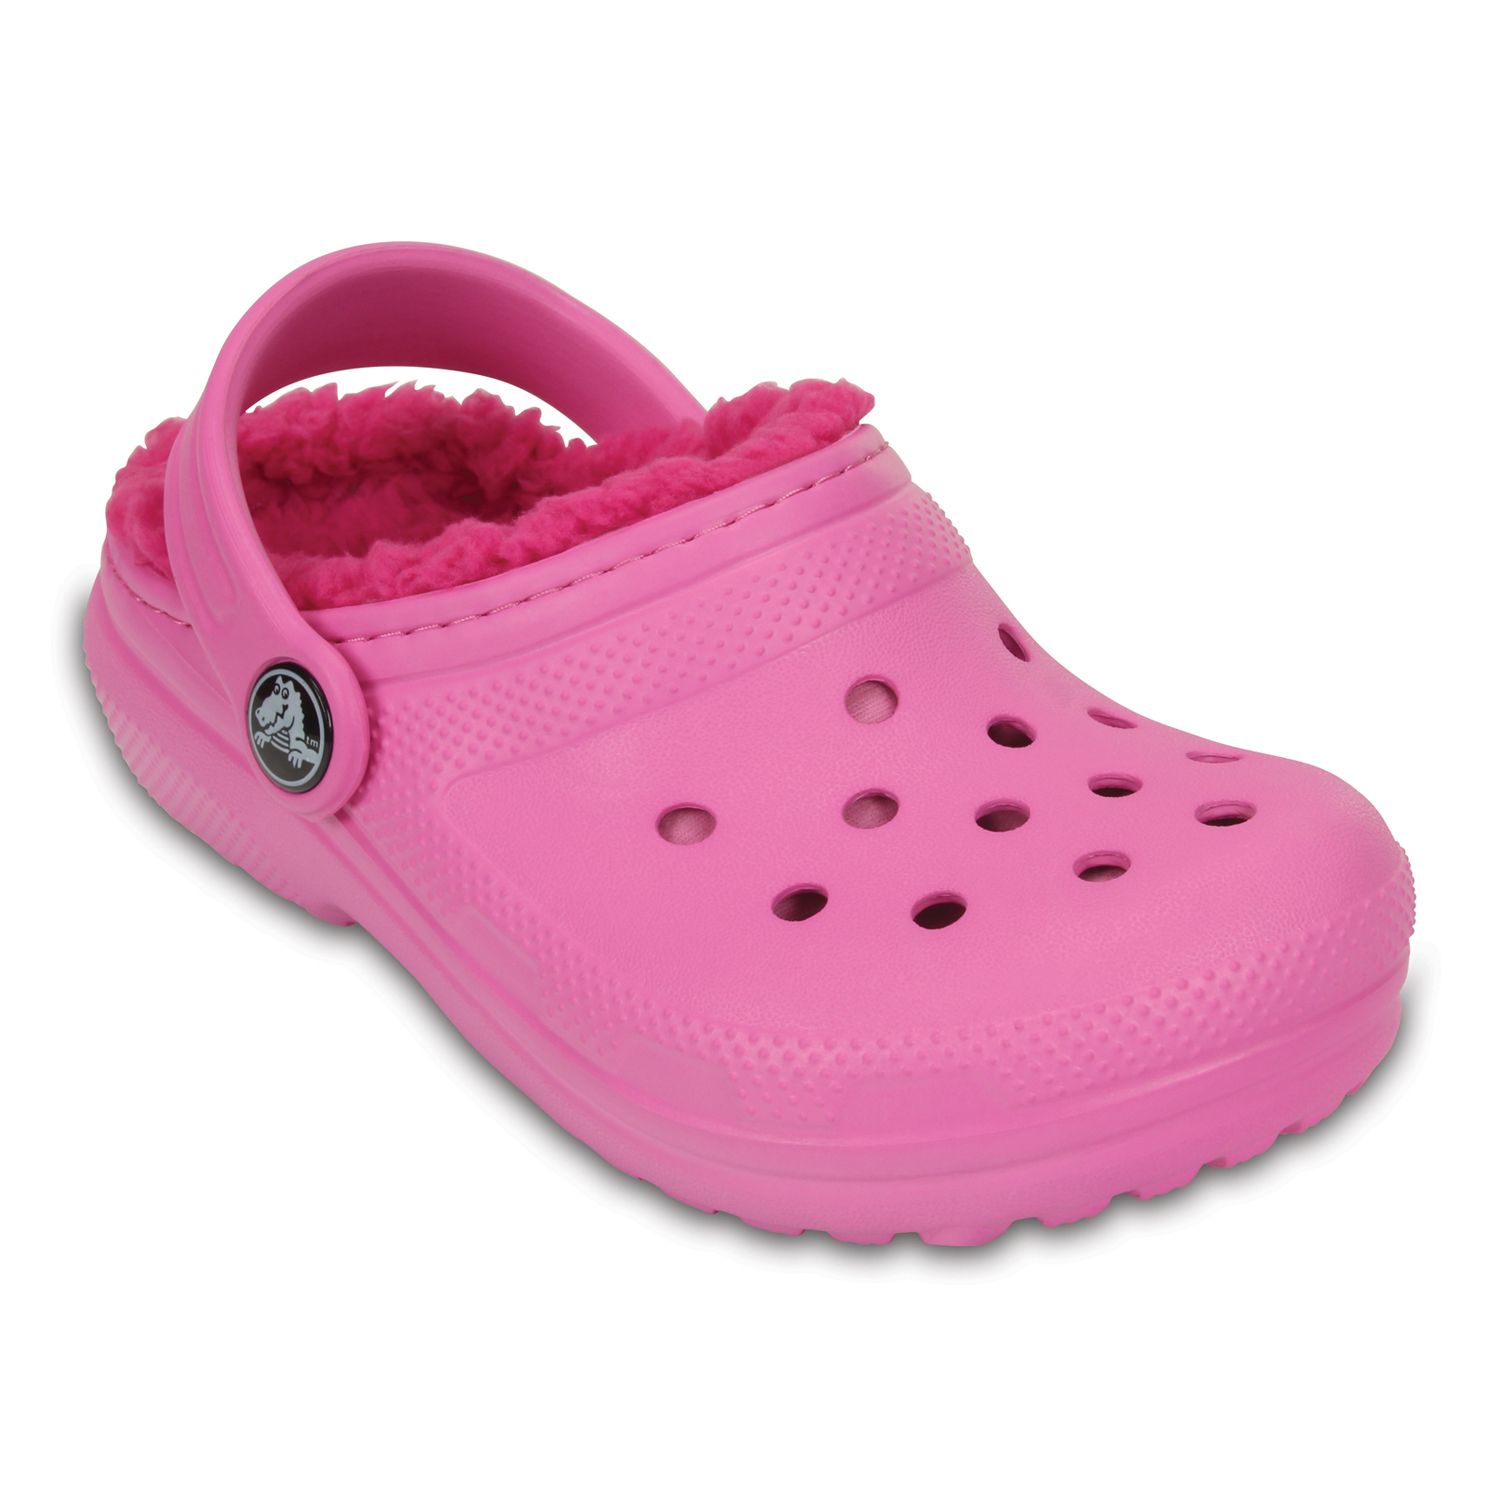 fuzzy crocs pink